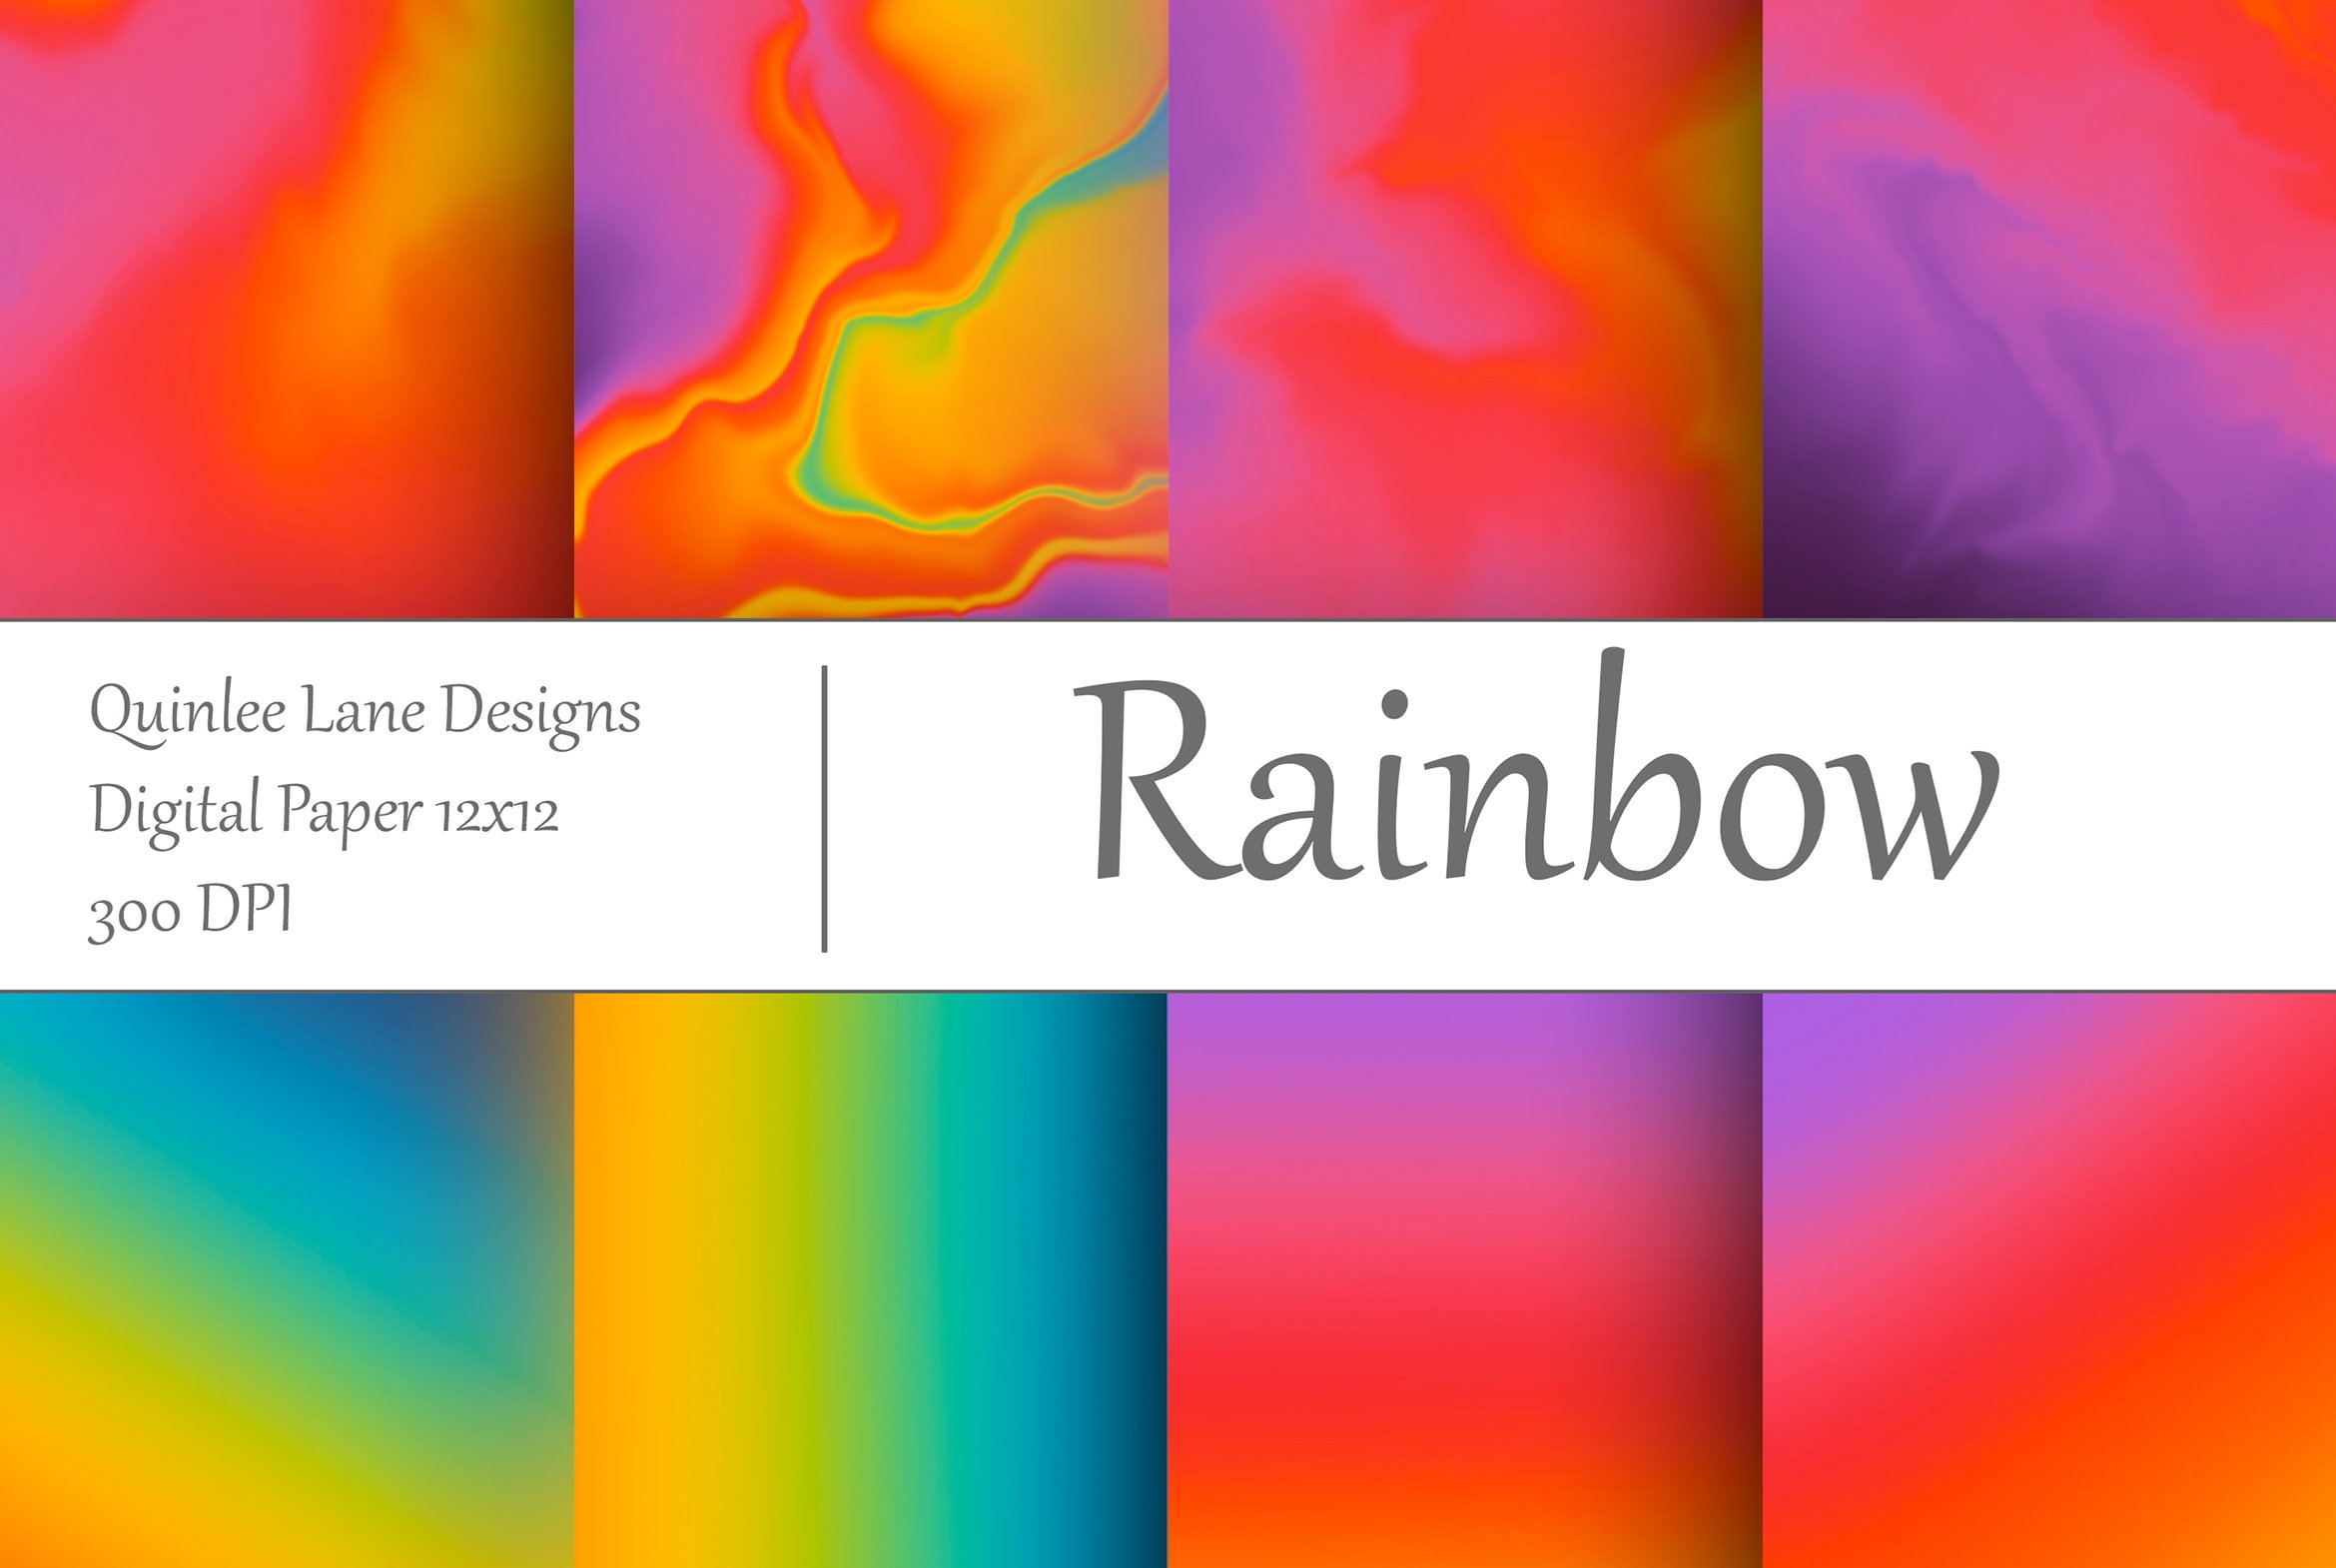 Rainbow Gradient Digital Textures cover image.